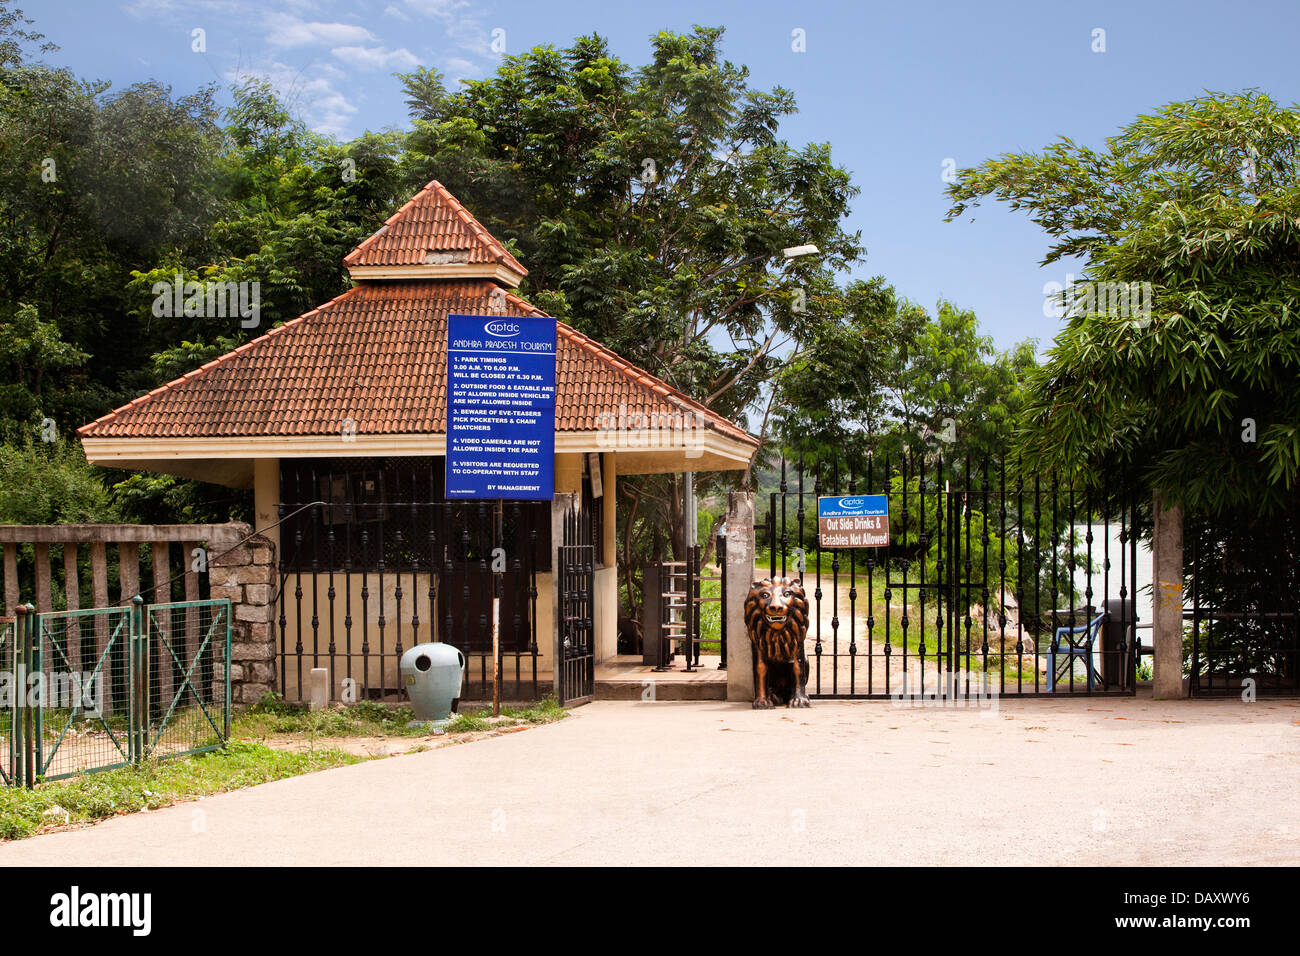 Entrée d'un parc, lac Durgam Chevuru, Rangareddy, Andhra Pradesh, Inde Banque D'Images